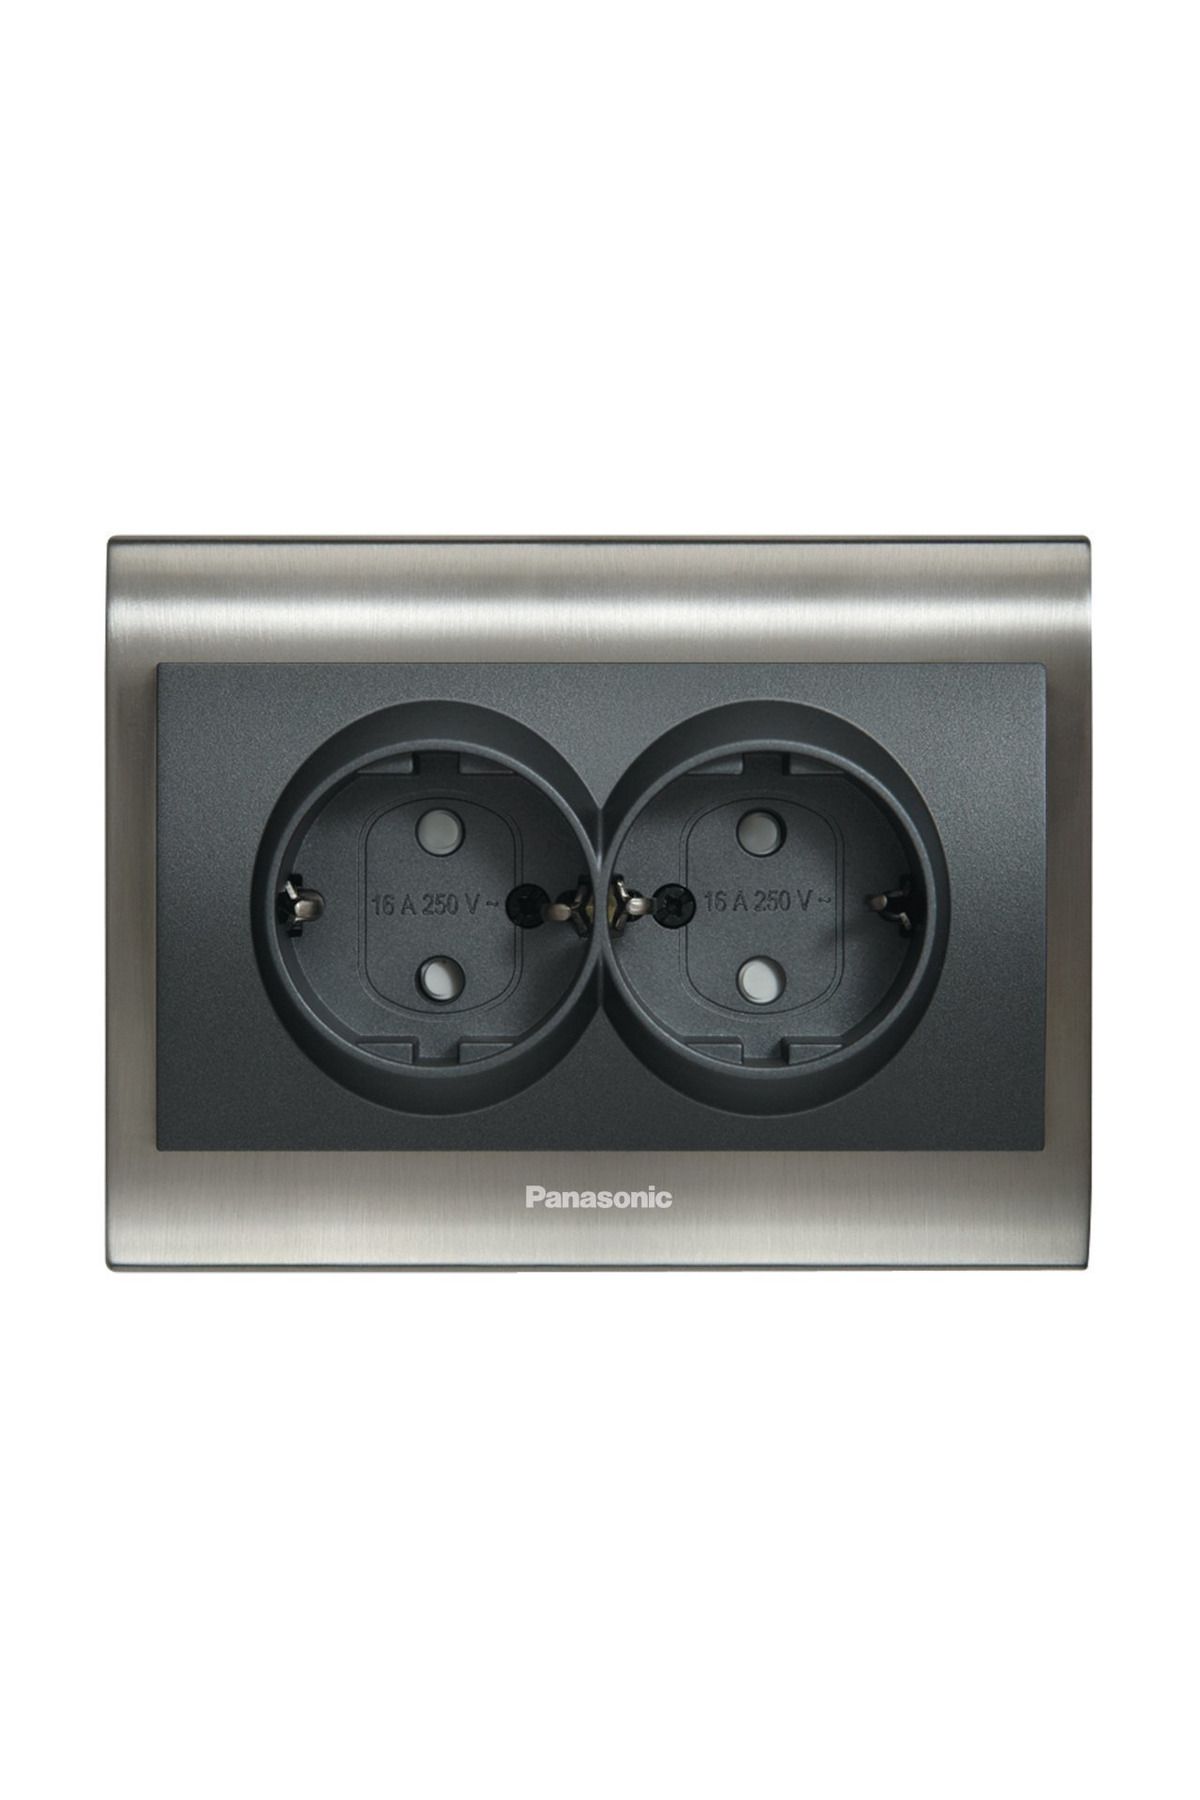 Panasonic Thea Blu İkili Topraklı Priz Çerçeve Inox+Beyaz Kapak Füme